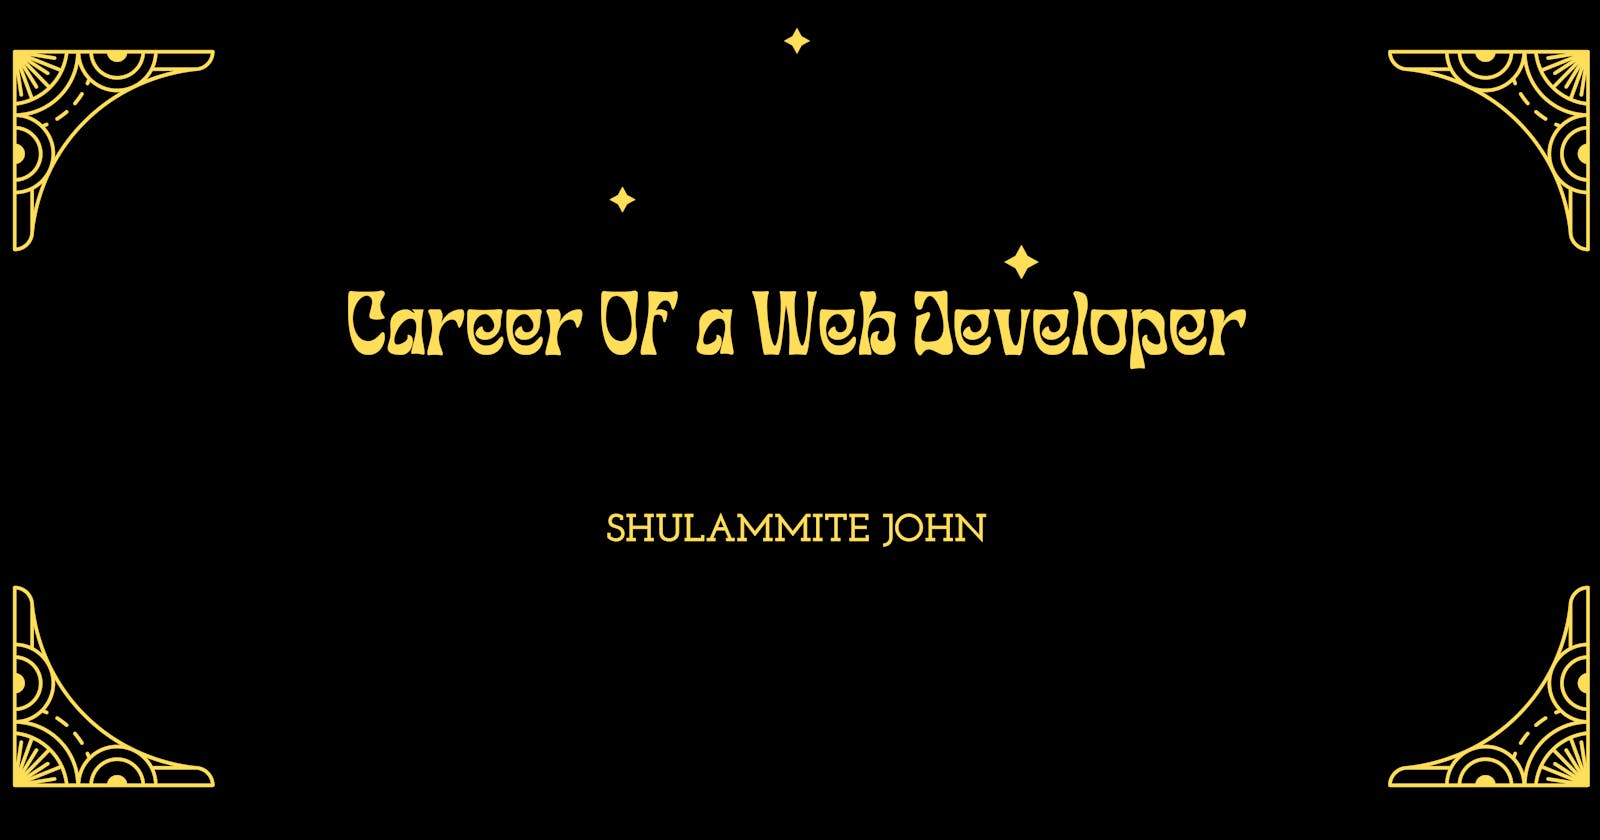 Career Of a Web Developer